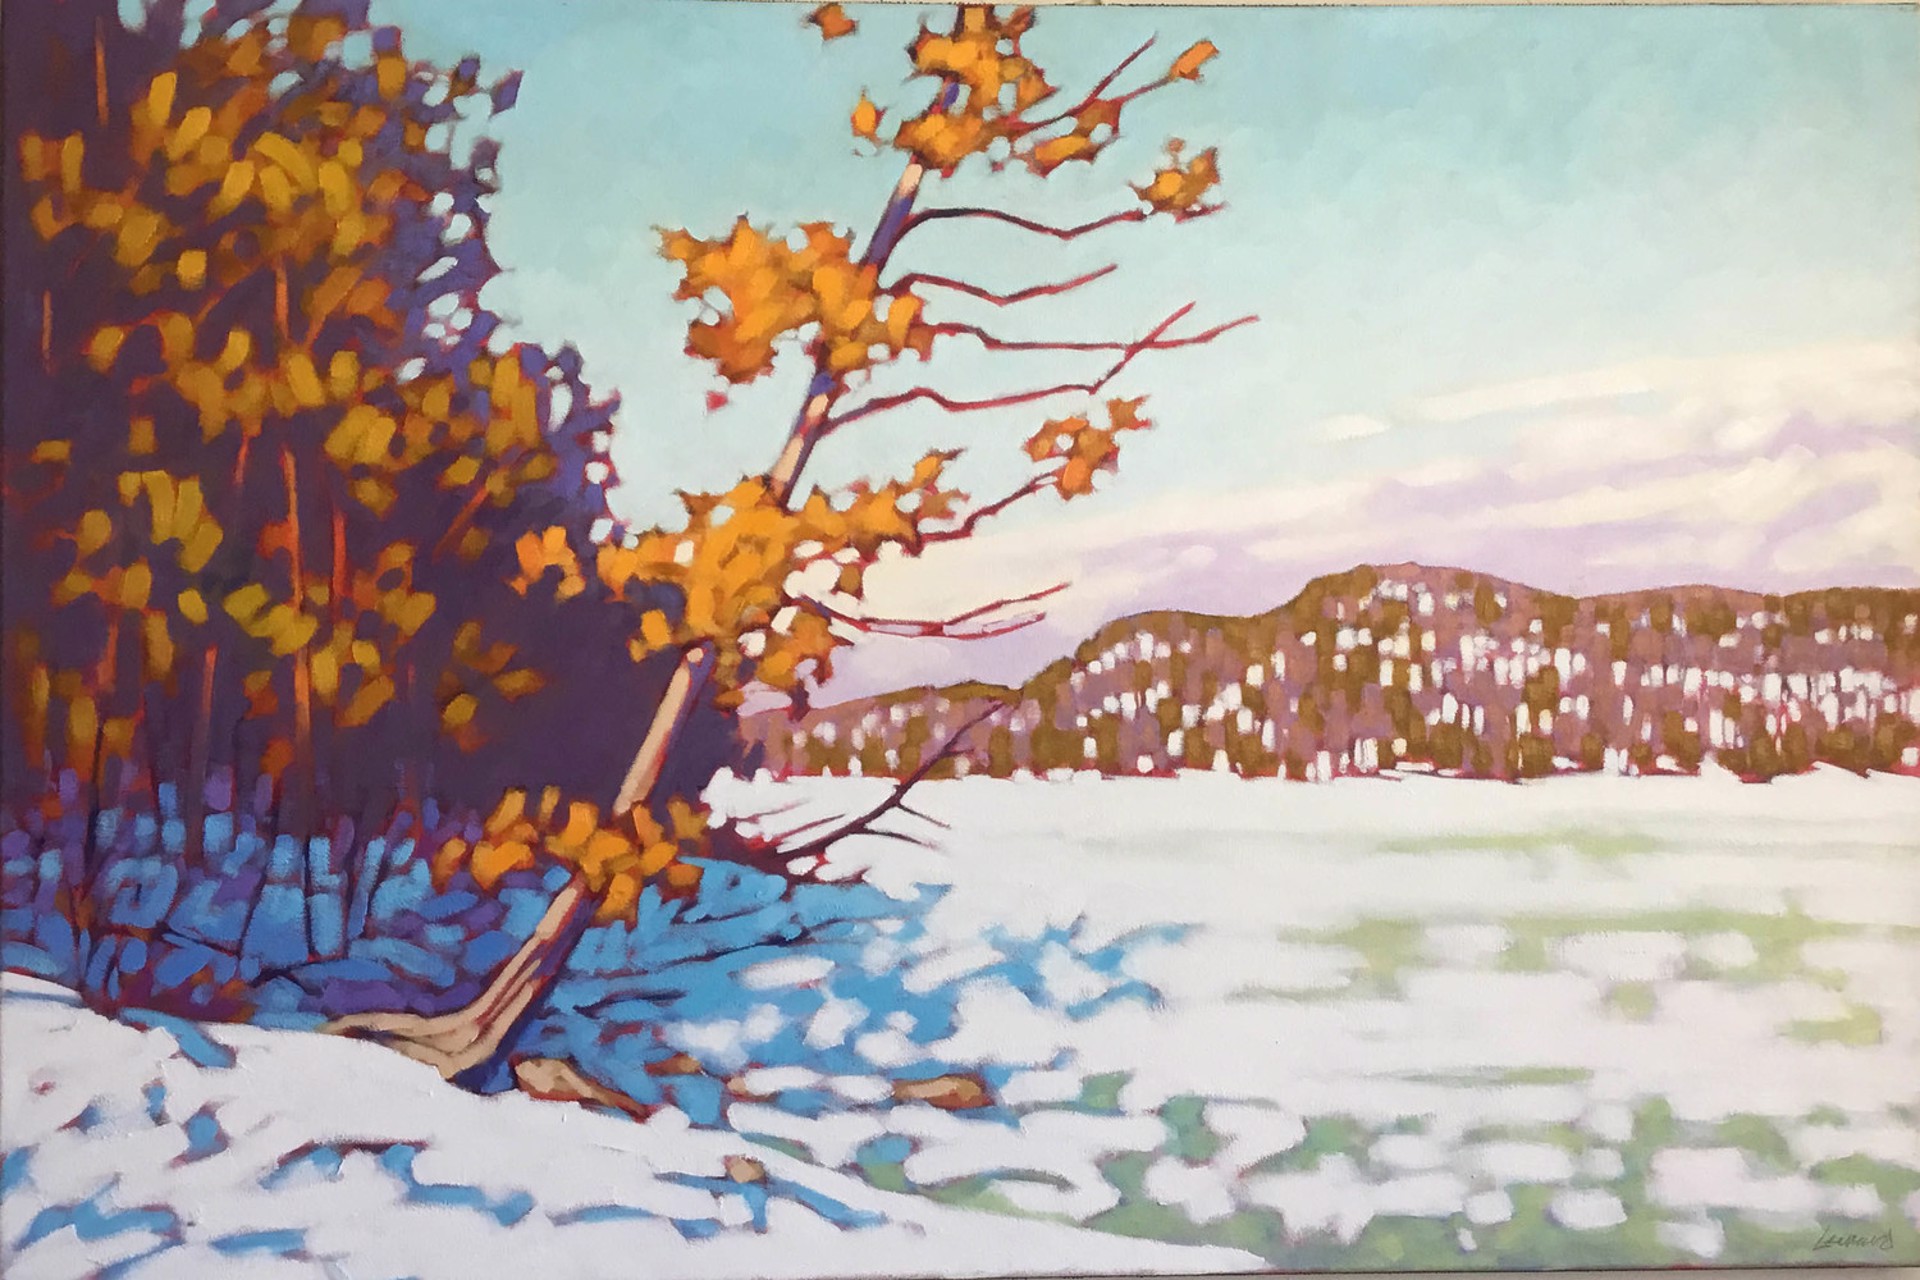 Winter Cedar by John Lennard